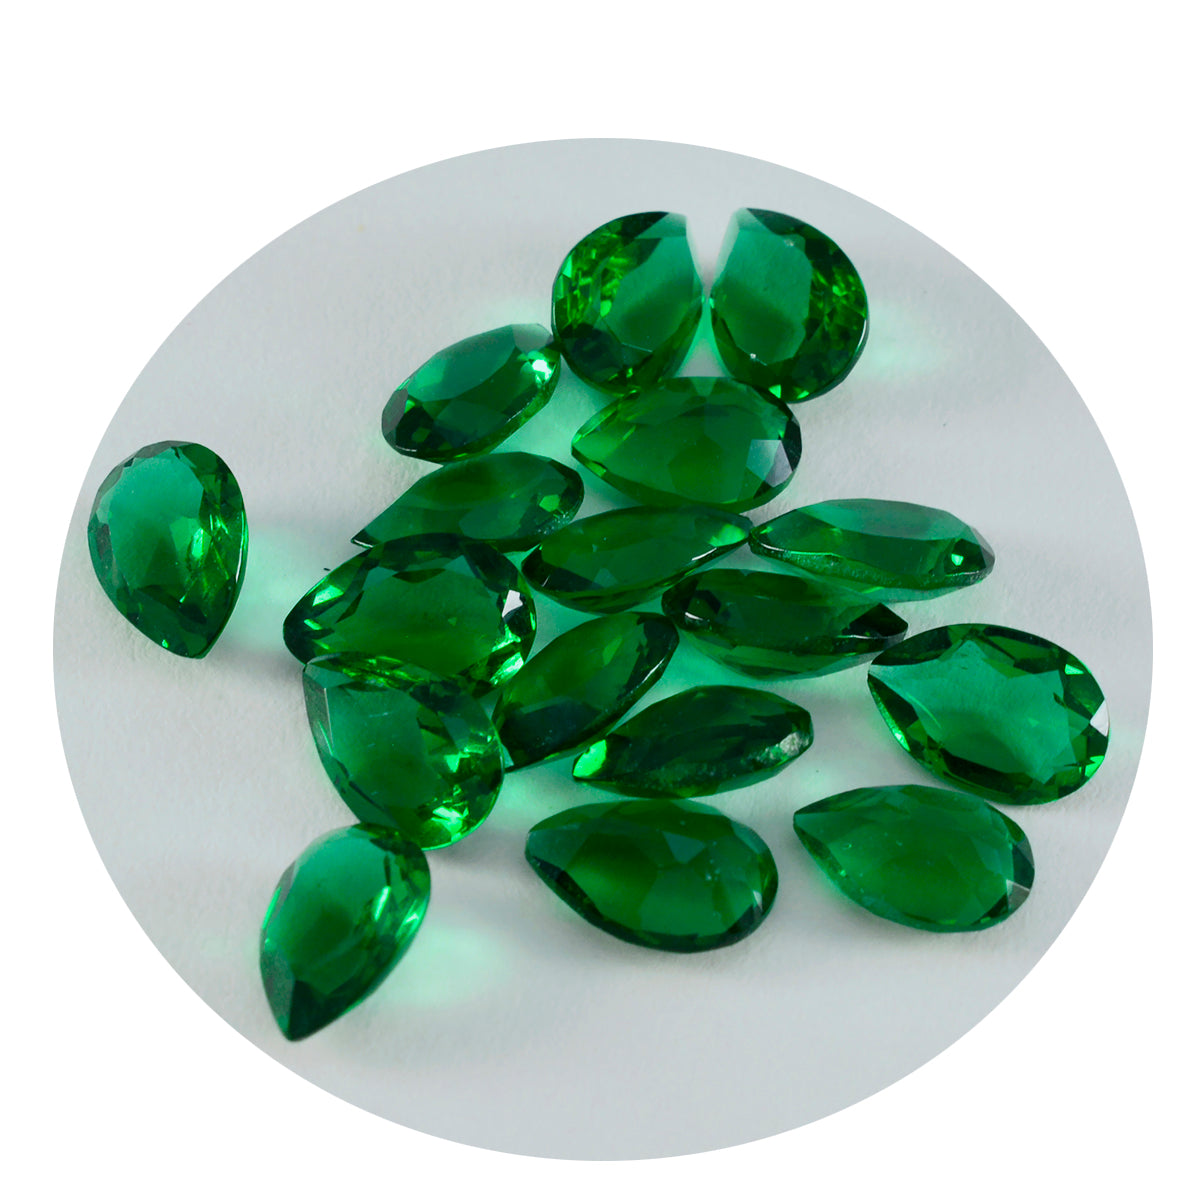 Riyogems 1PC Green Emerald CZ Faceted 7x10 mm Pear Shape startling Quality Stone